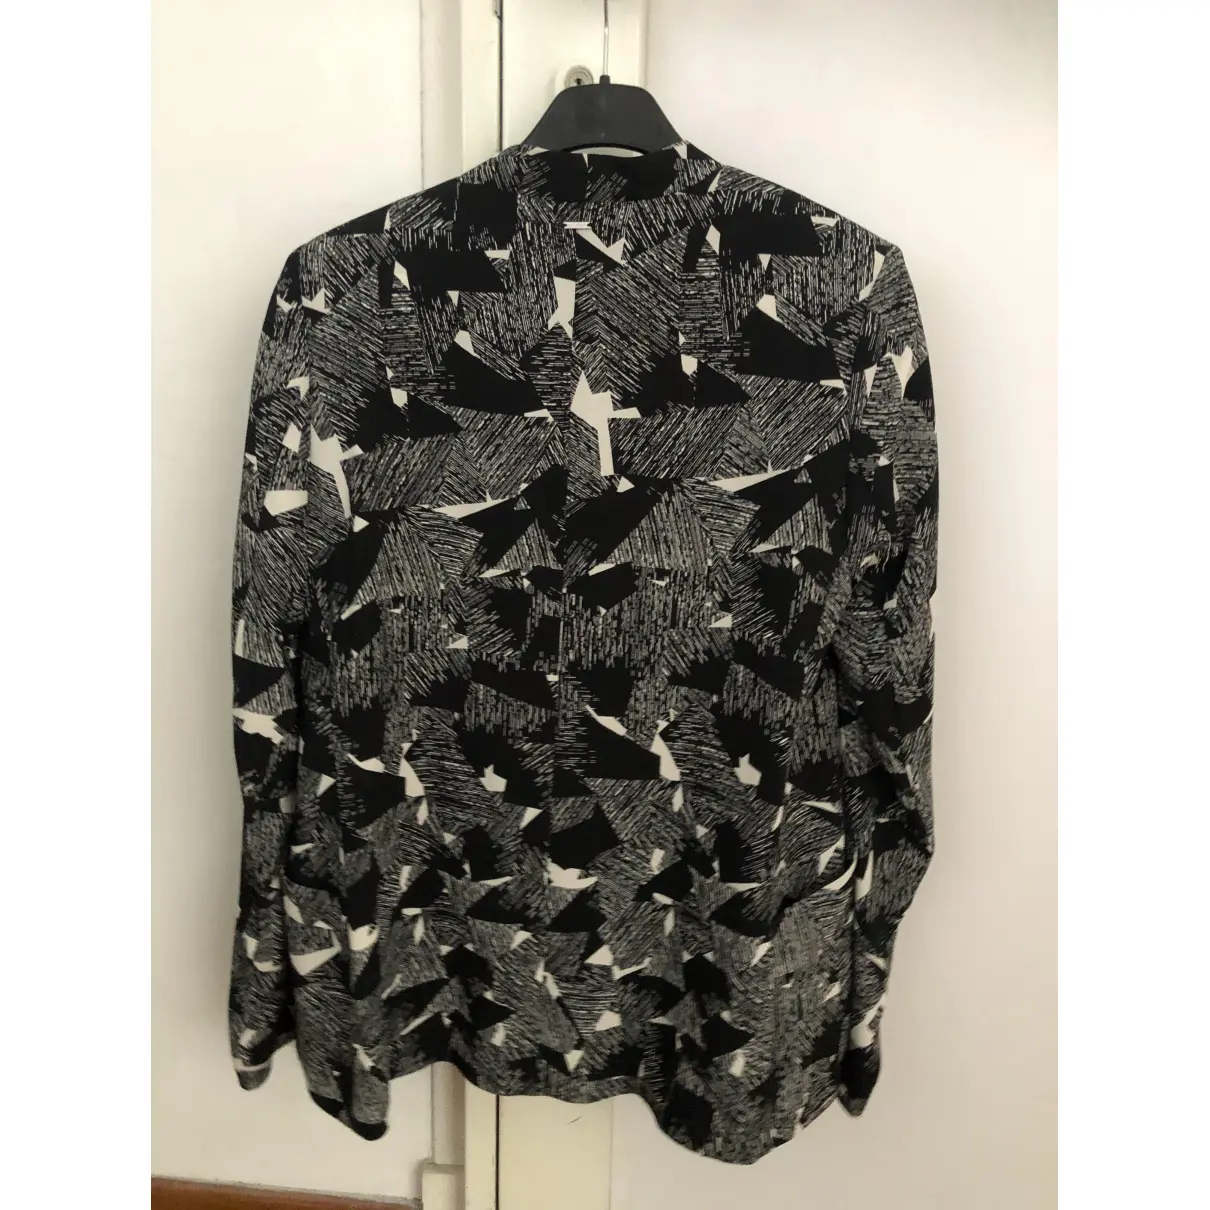 Buy Ikks Black Polyester Jacket online